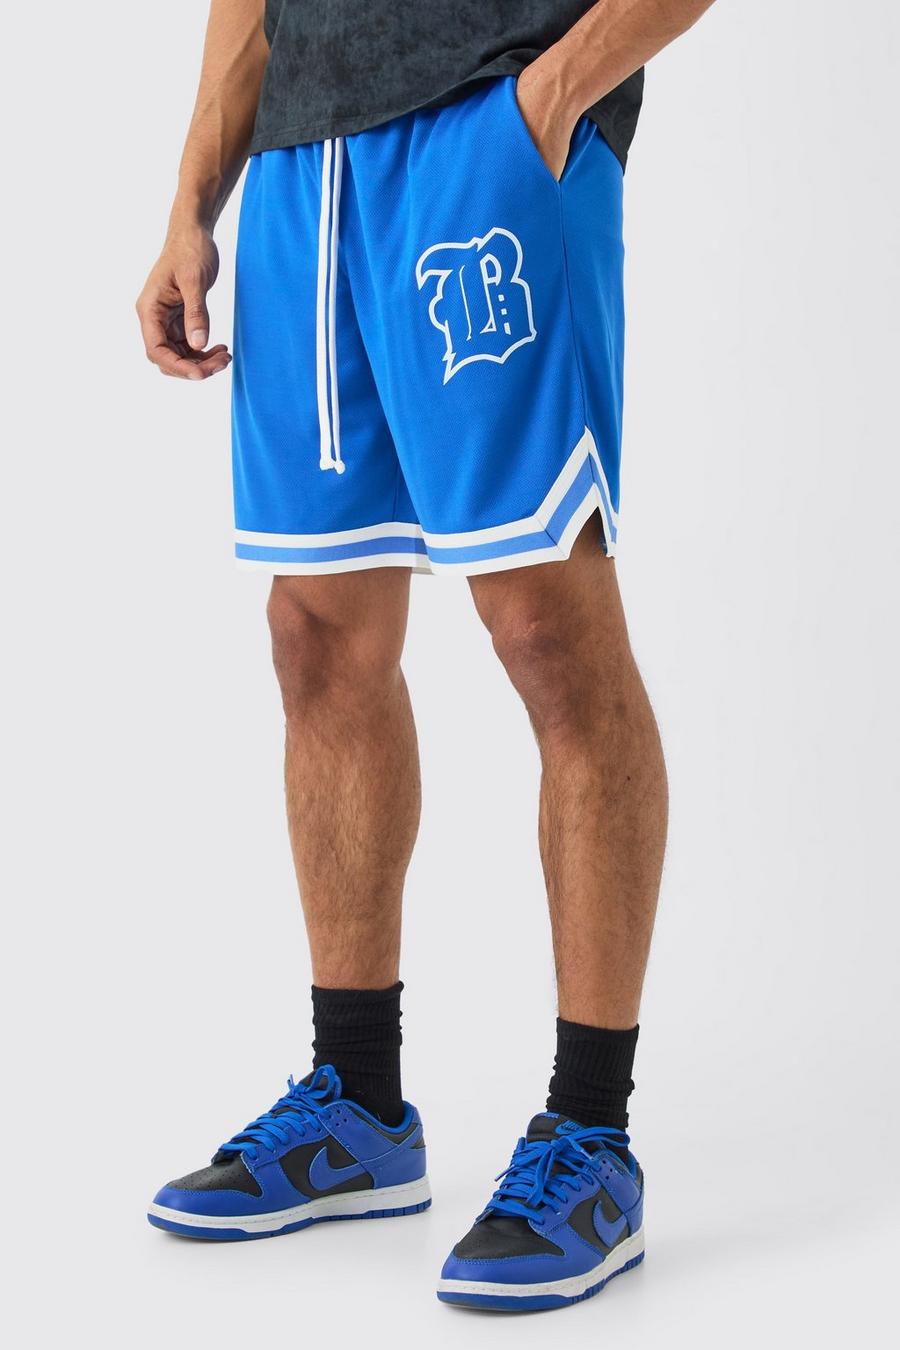 Pantalón corto holgado estilo baloncesto de malla con aplique B, Cobalt